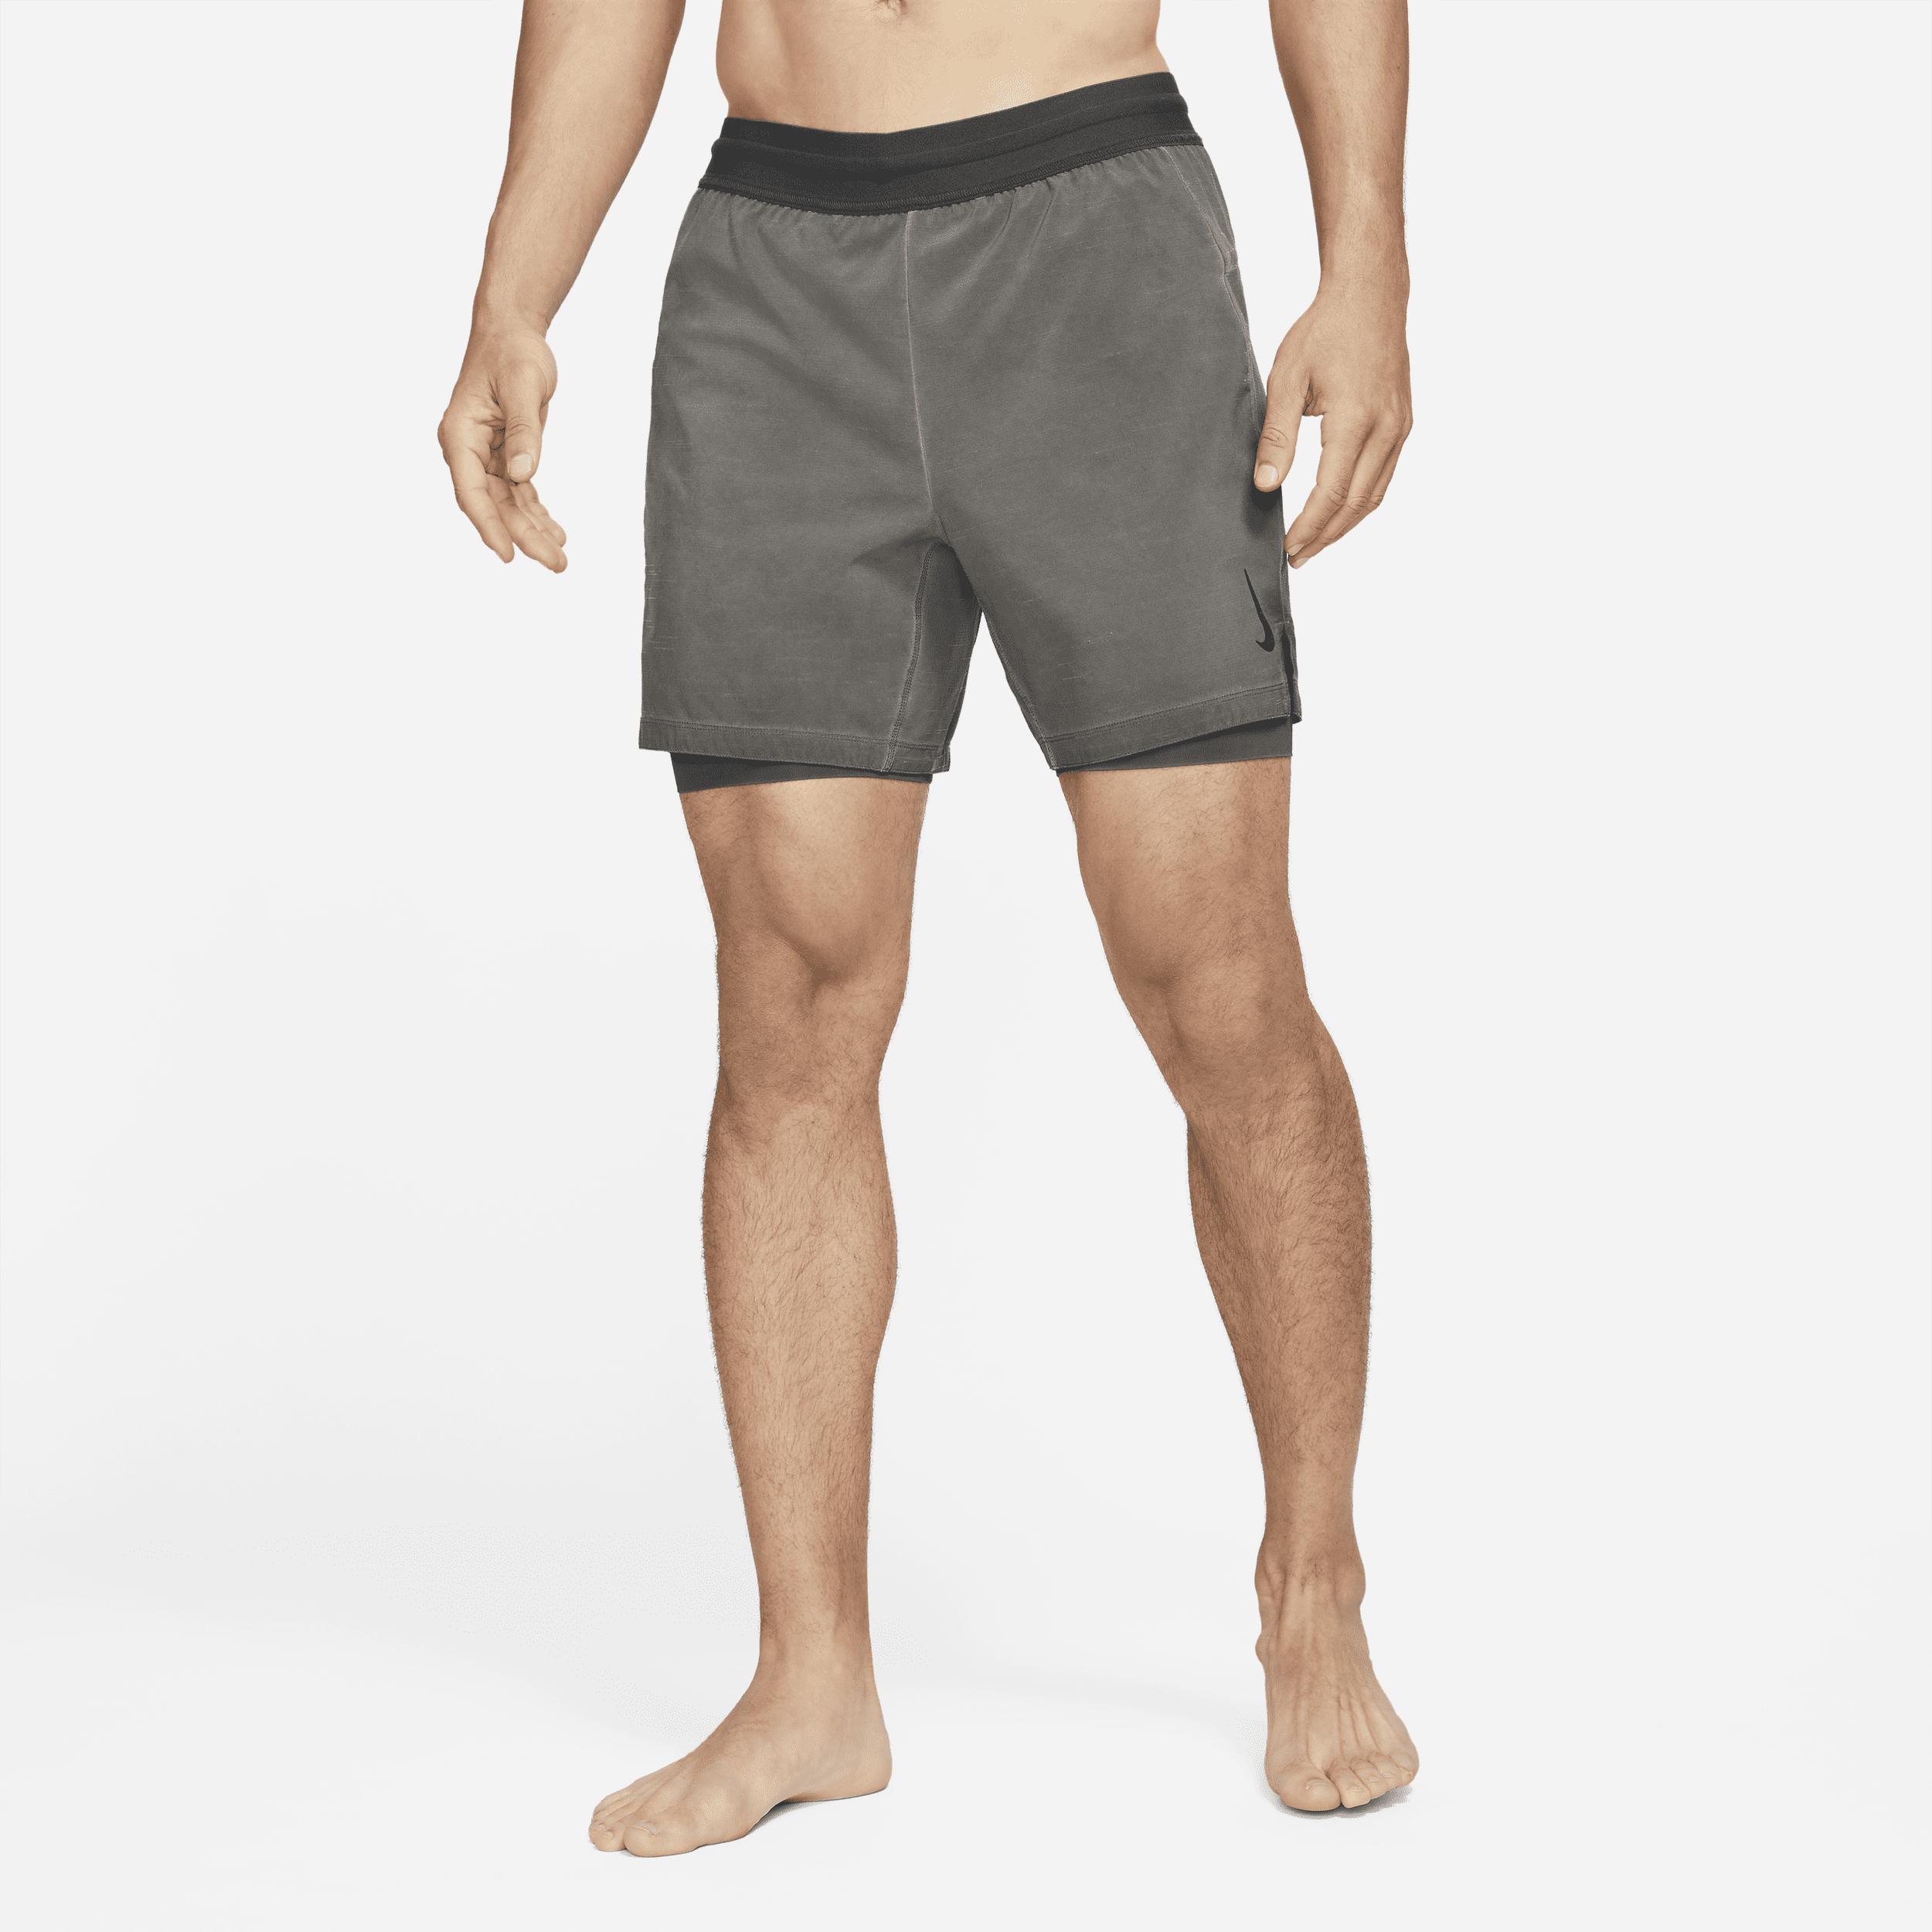 Nike Yoga Dri-fit 2-in-1 Shorts in Gray for Men